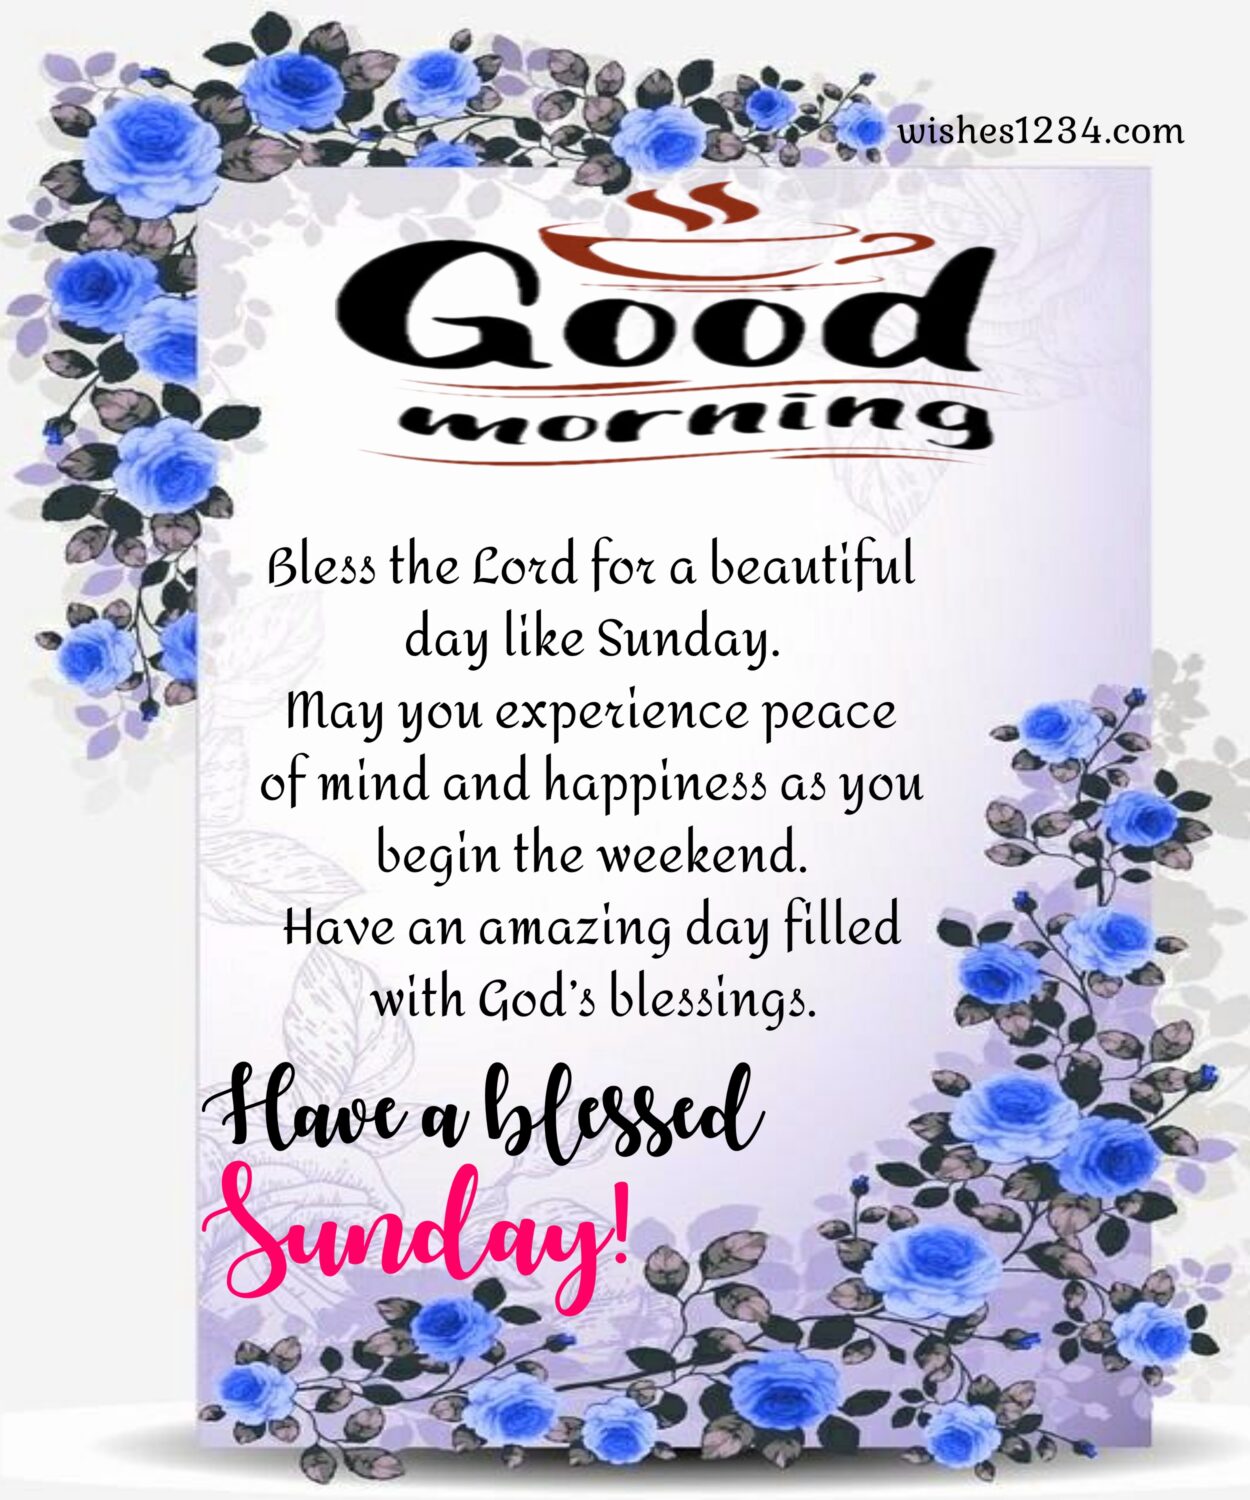 Sunday quotes with blue flower background, Sunday Morning Wishes.